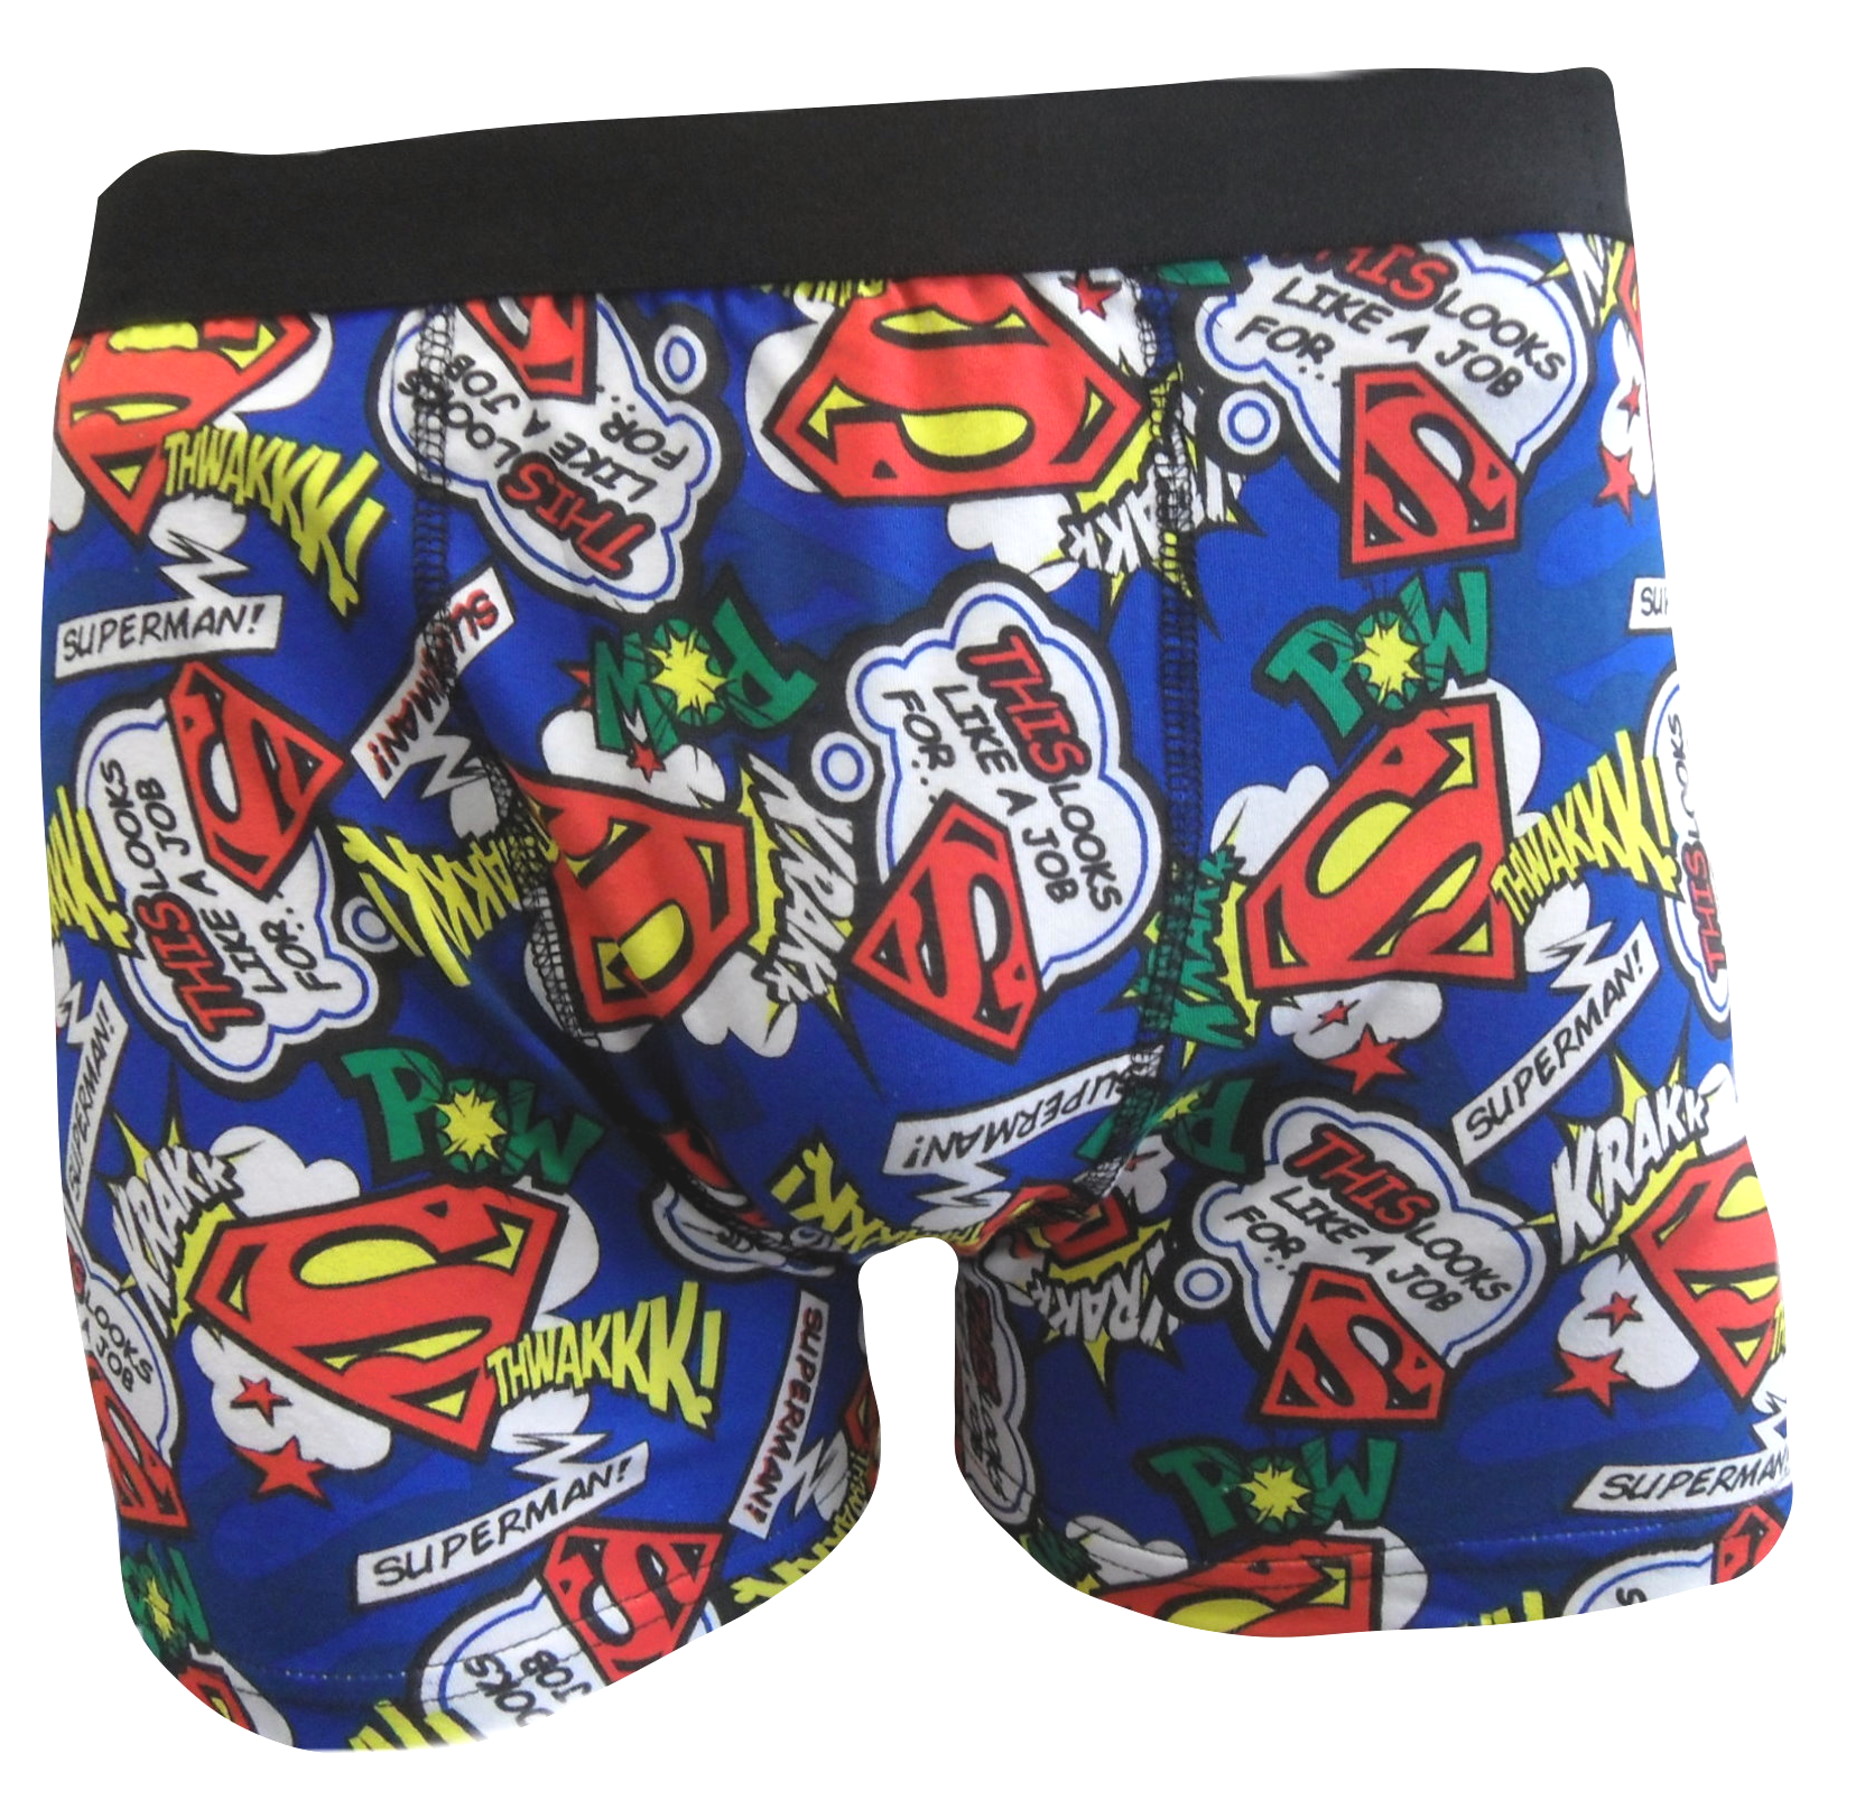 Superman Boxer Shorts MUW42 a.JPG  by Thingimijigs